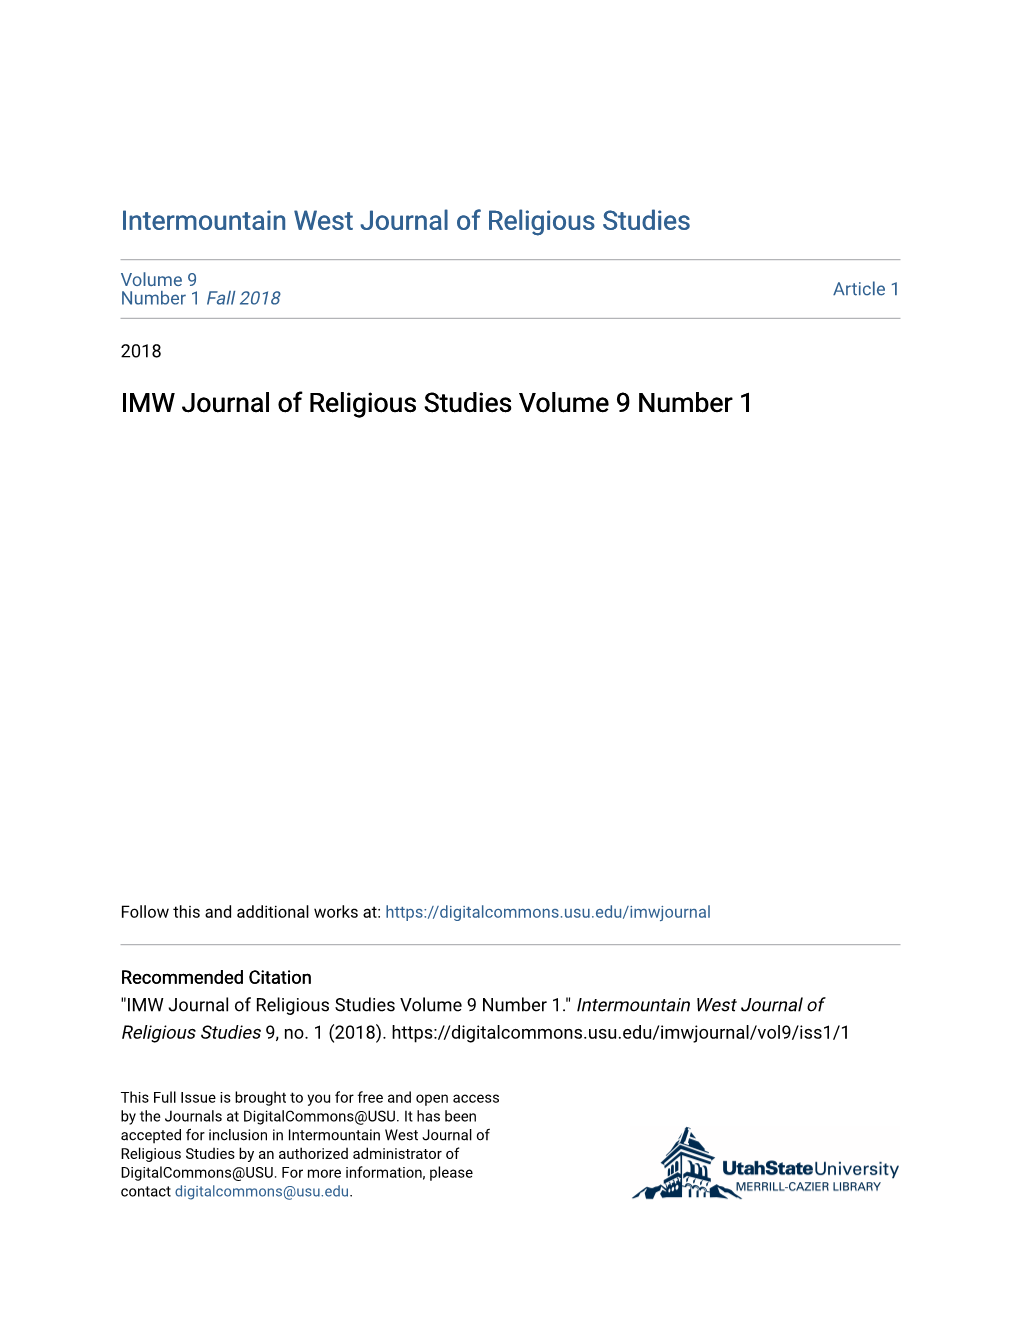 IMW Journal of Religious Studies Volume 9 Number 1